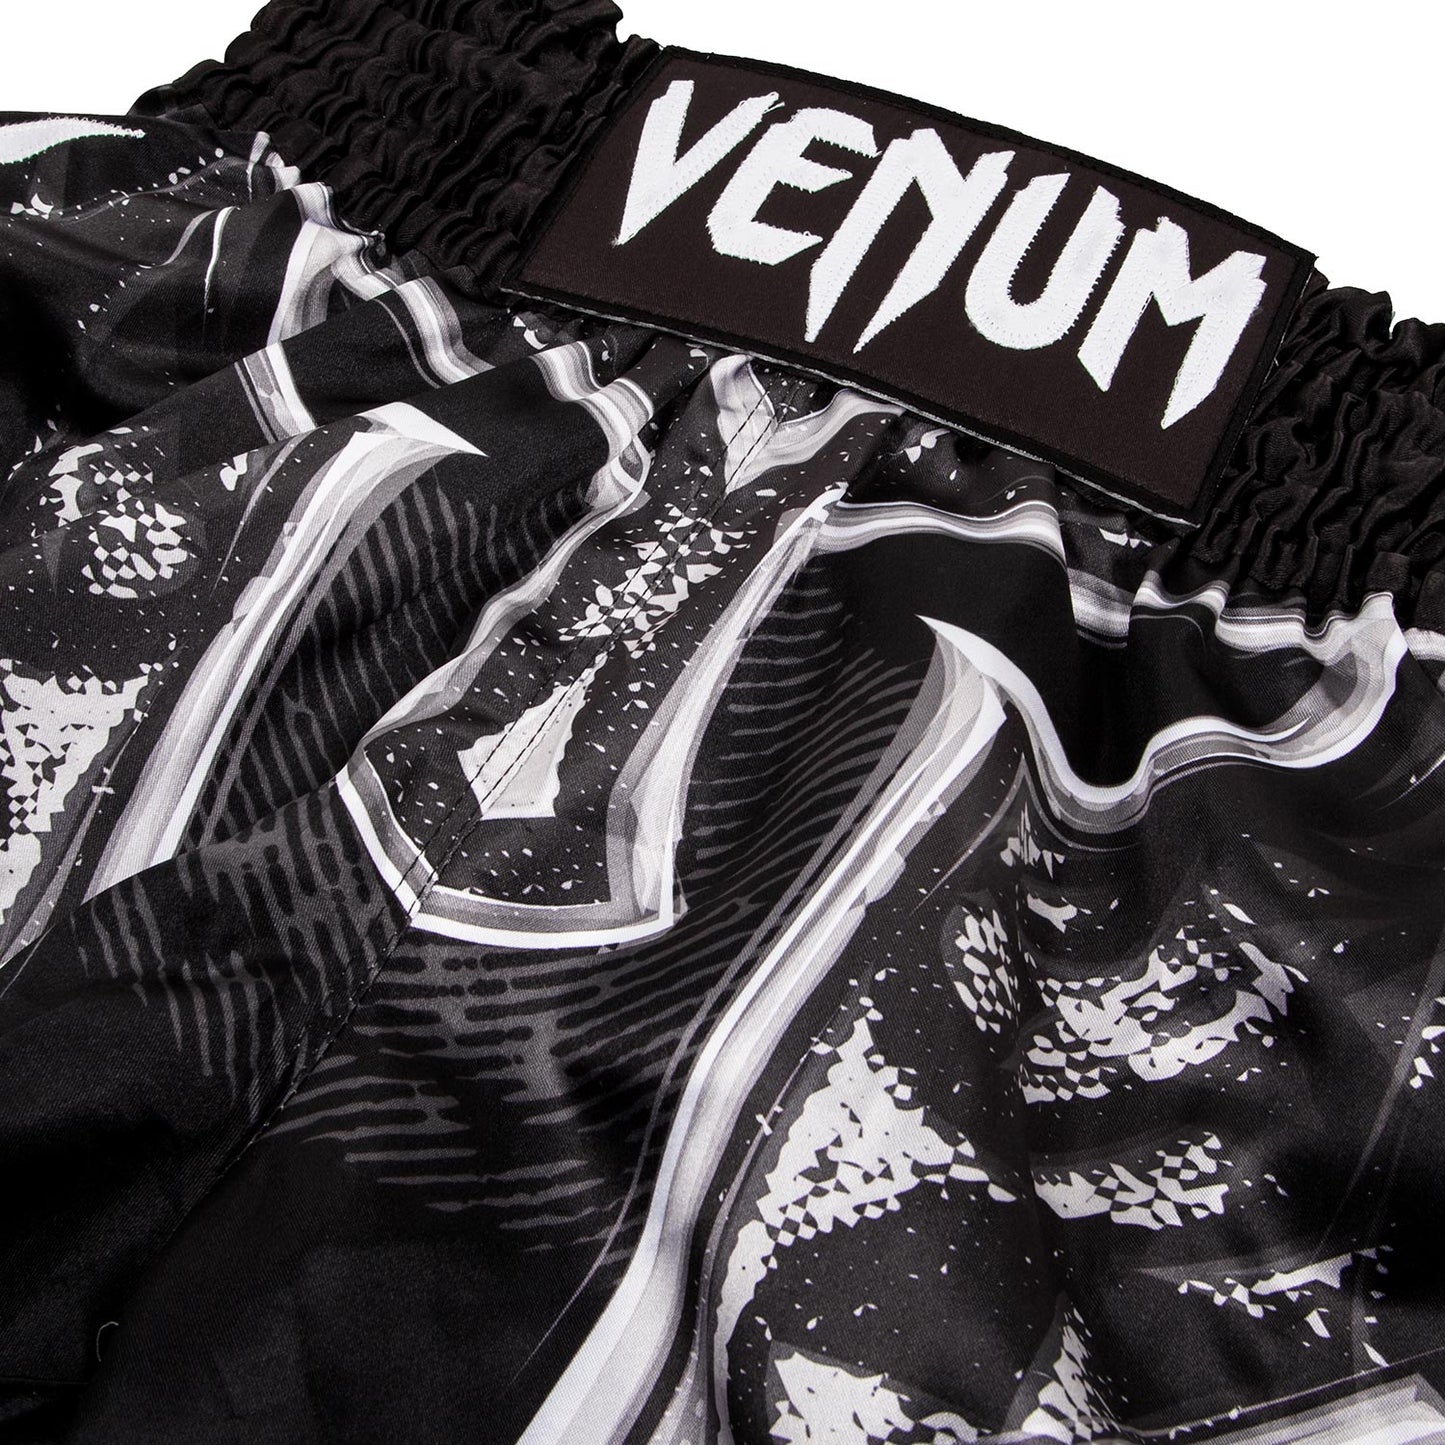 Venum Gladiator 3.0 Muay Thai Shorts - Black/White